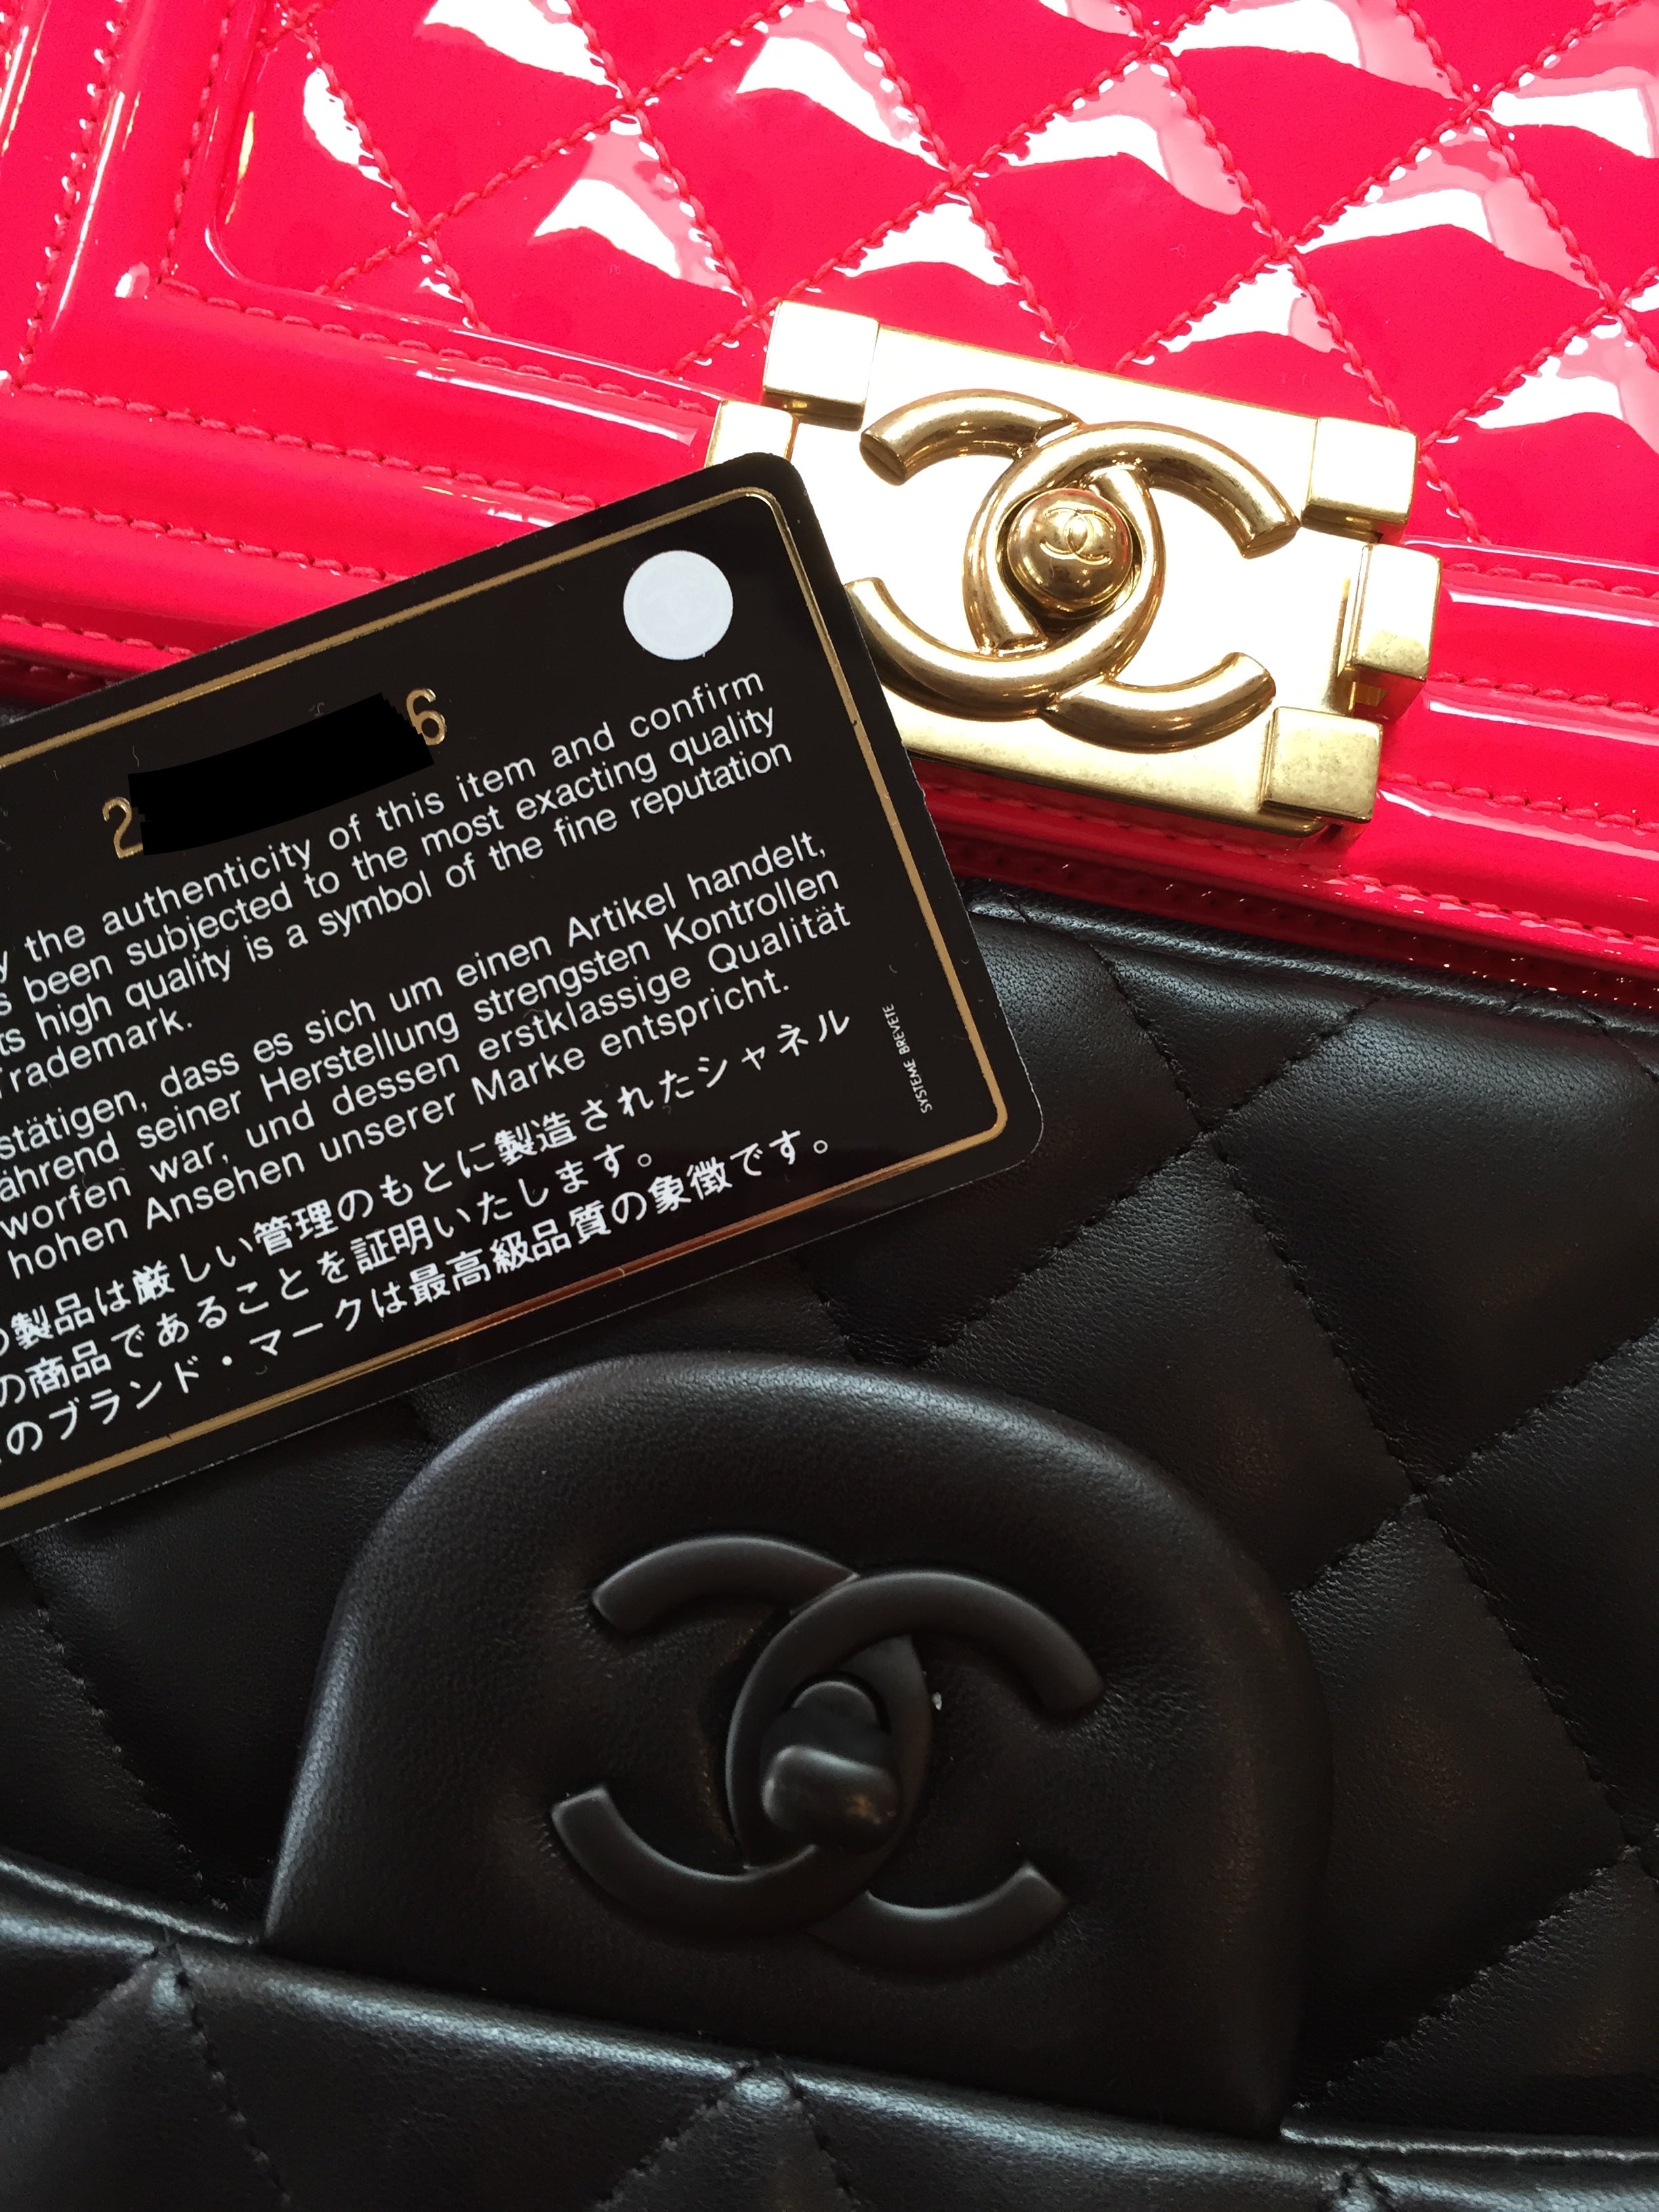 Beginners guide to buying preloved luxury bags - BOPF